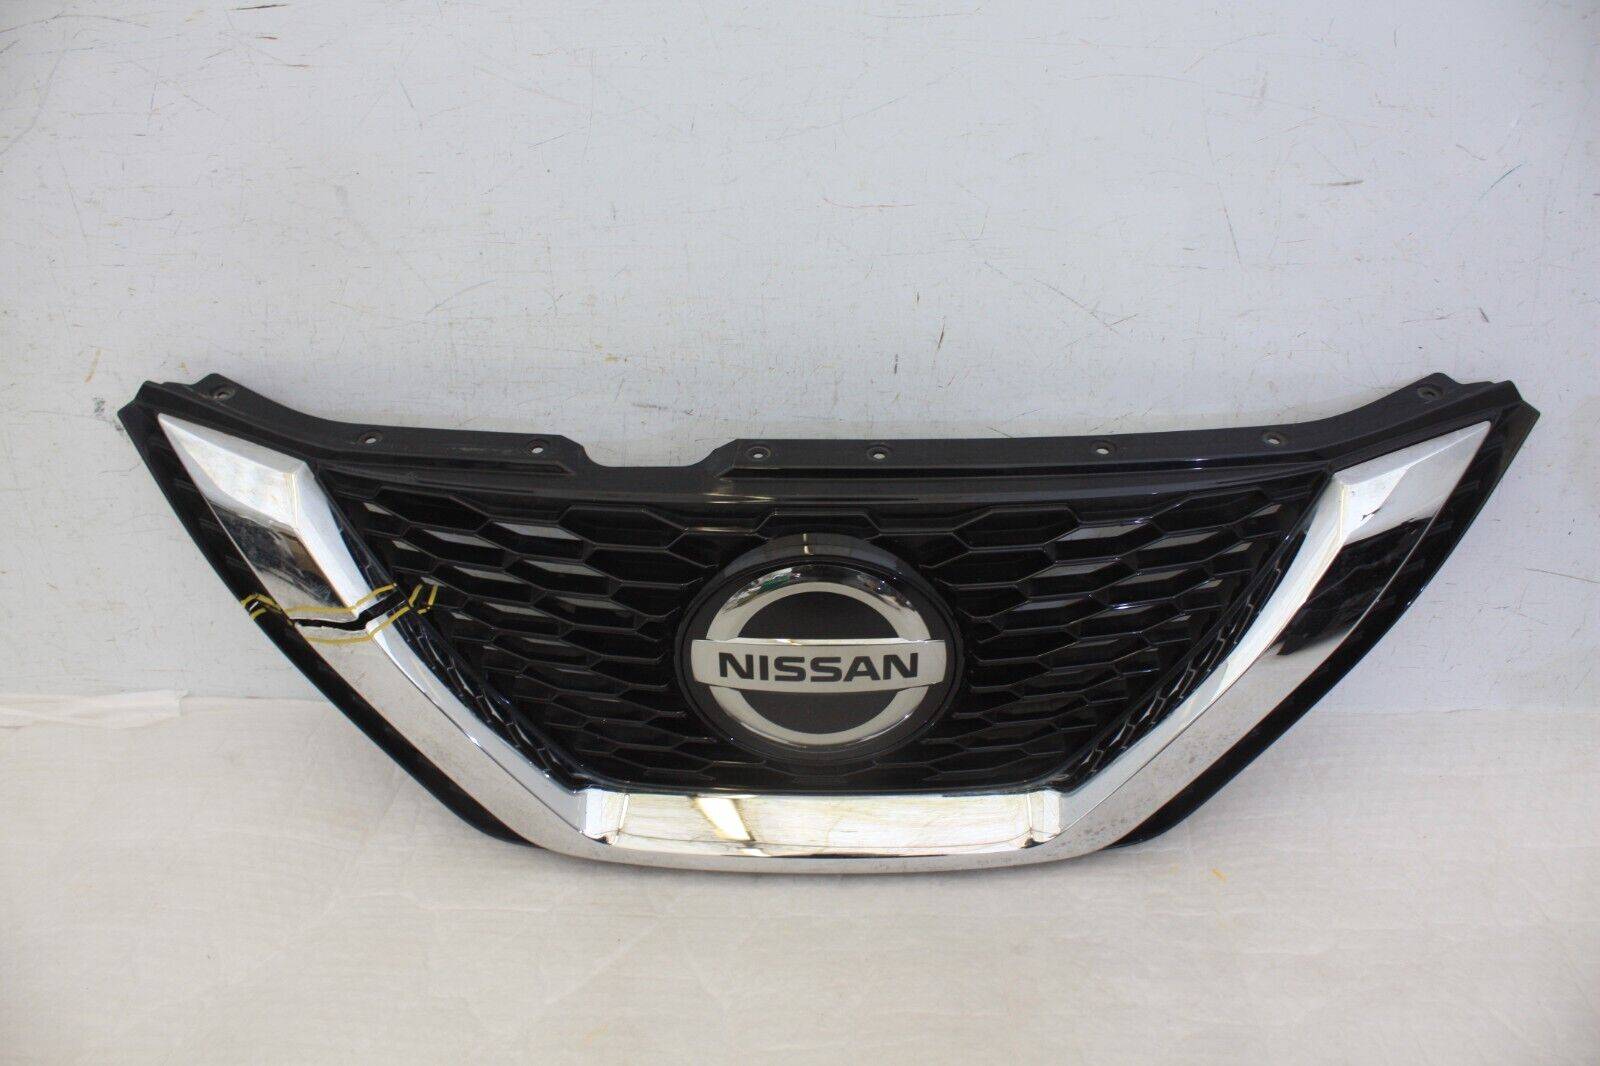 Nissan Qashqai Front Bumper Grill 62310 HV3 Genuine DAMAGED 176343981883